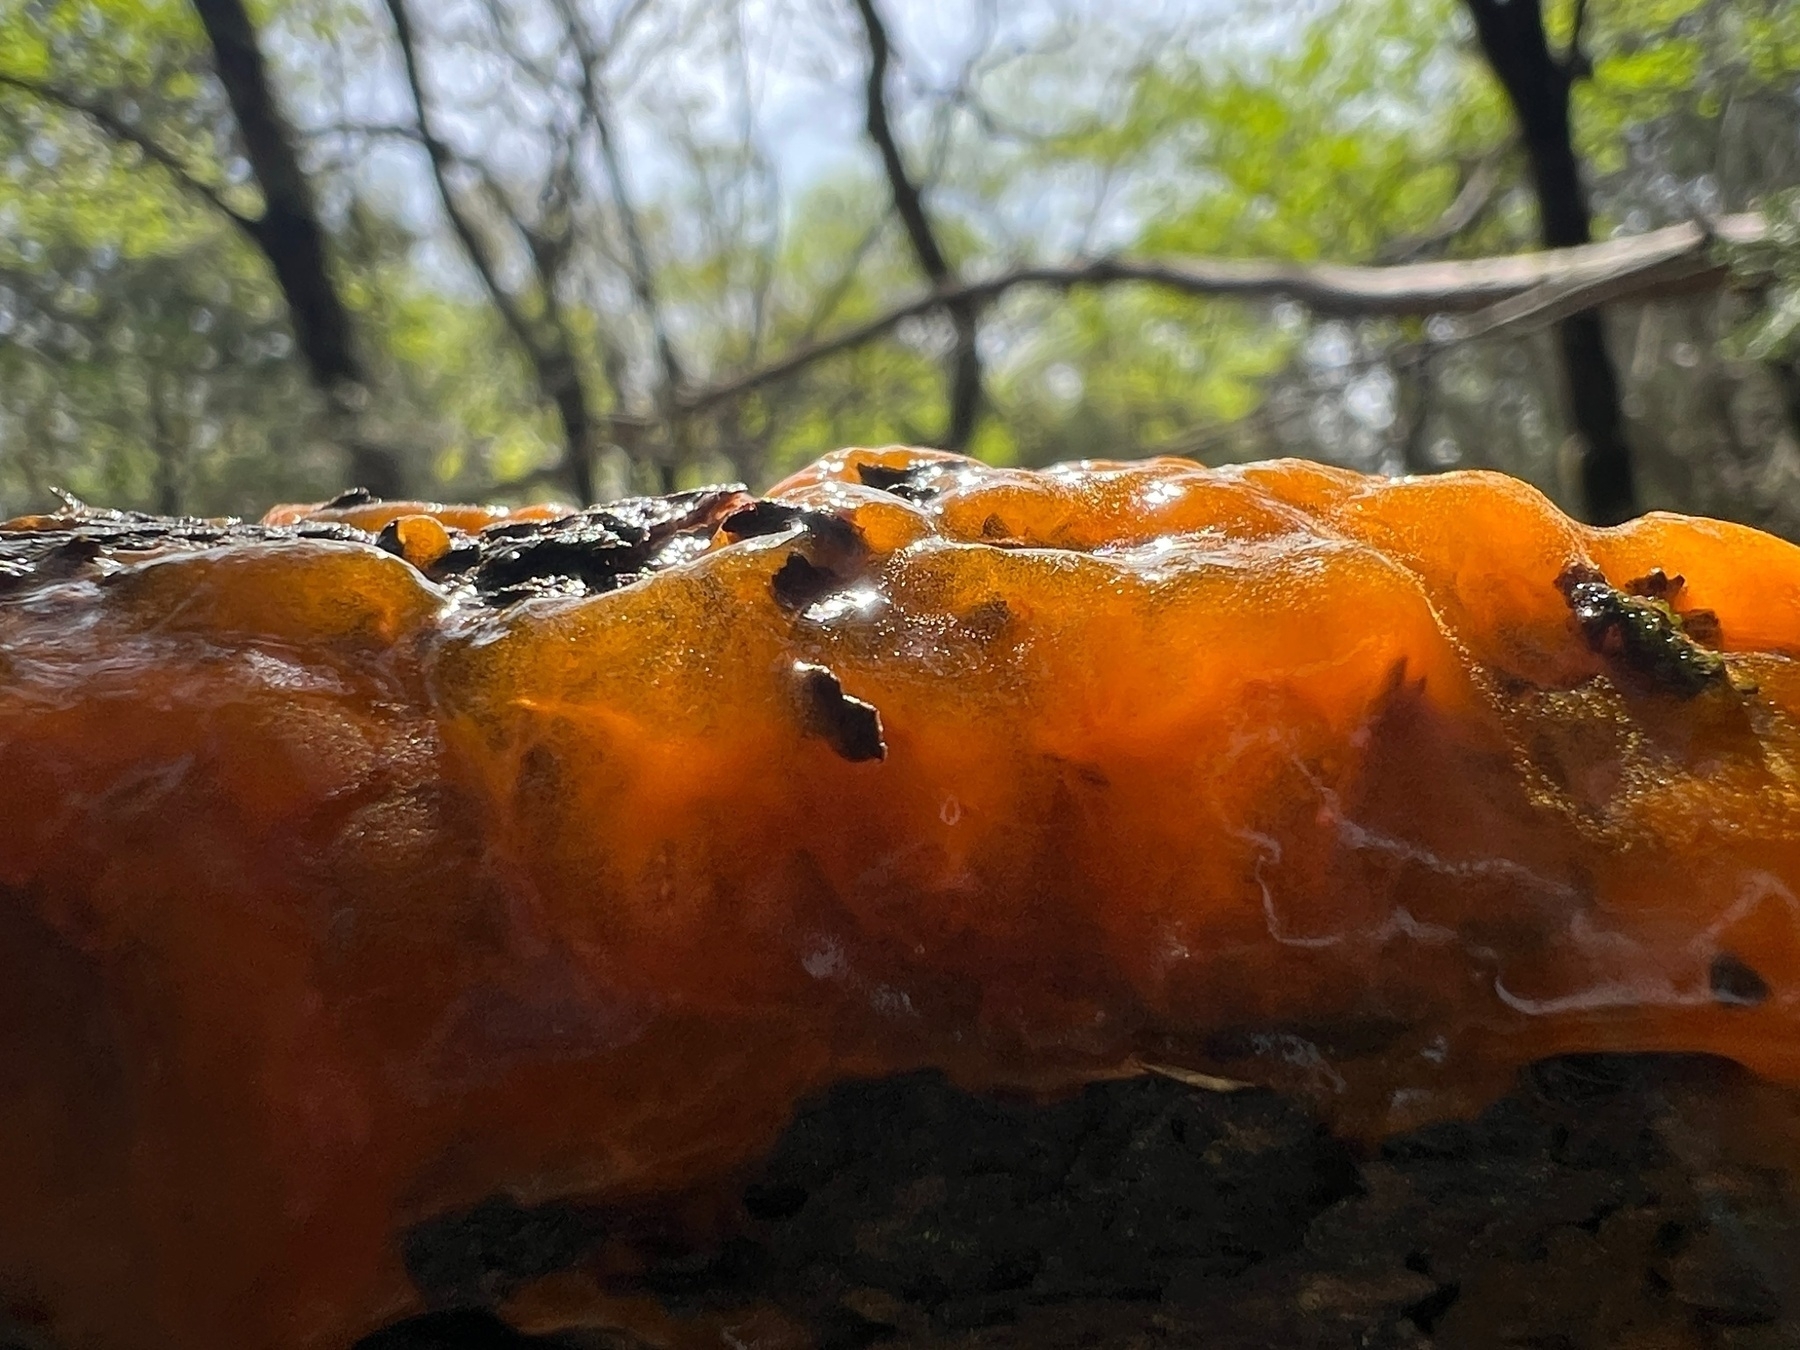 A cedar tree branch is coverd by a semi-translucent, vibrant orange gooey slime.